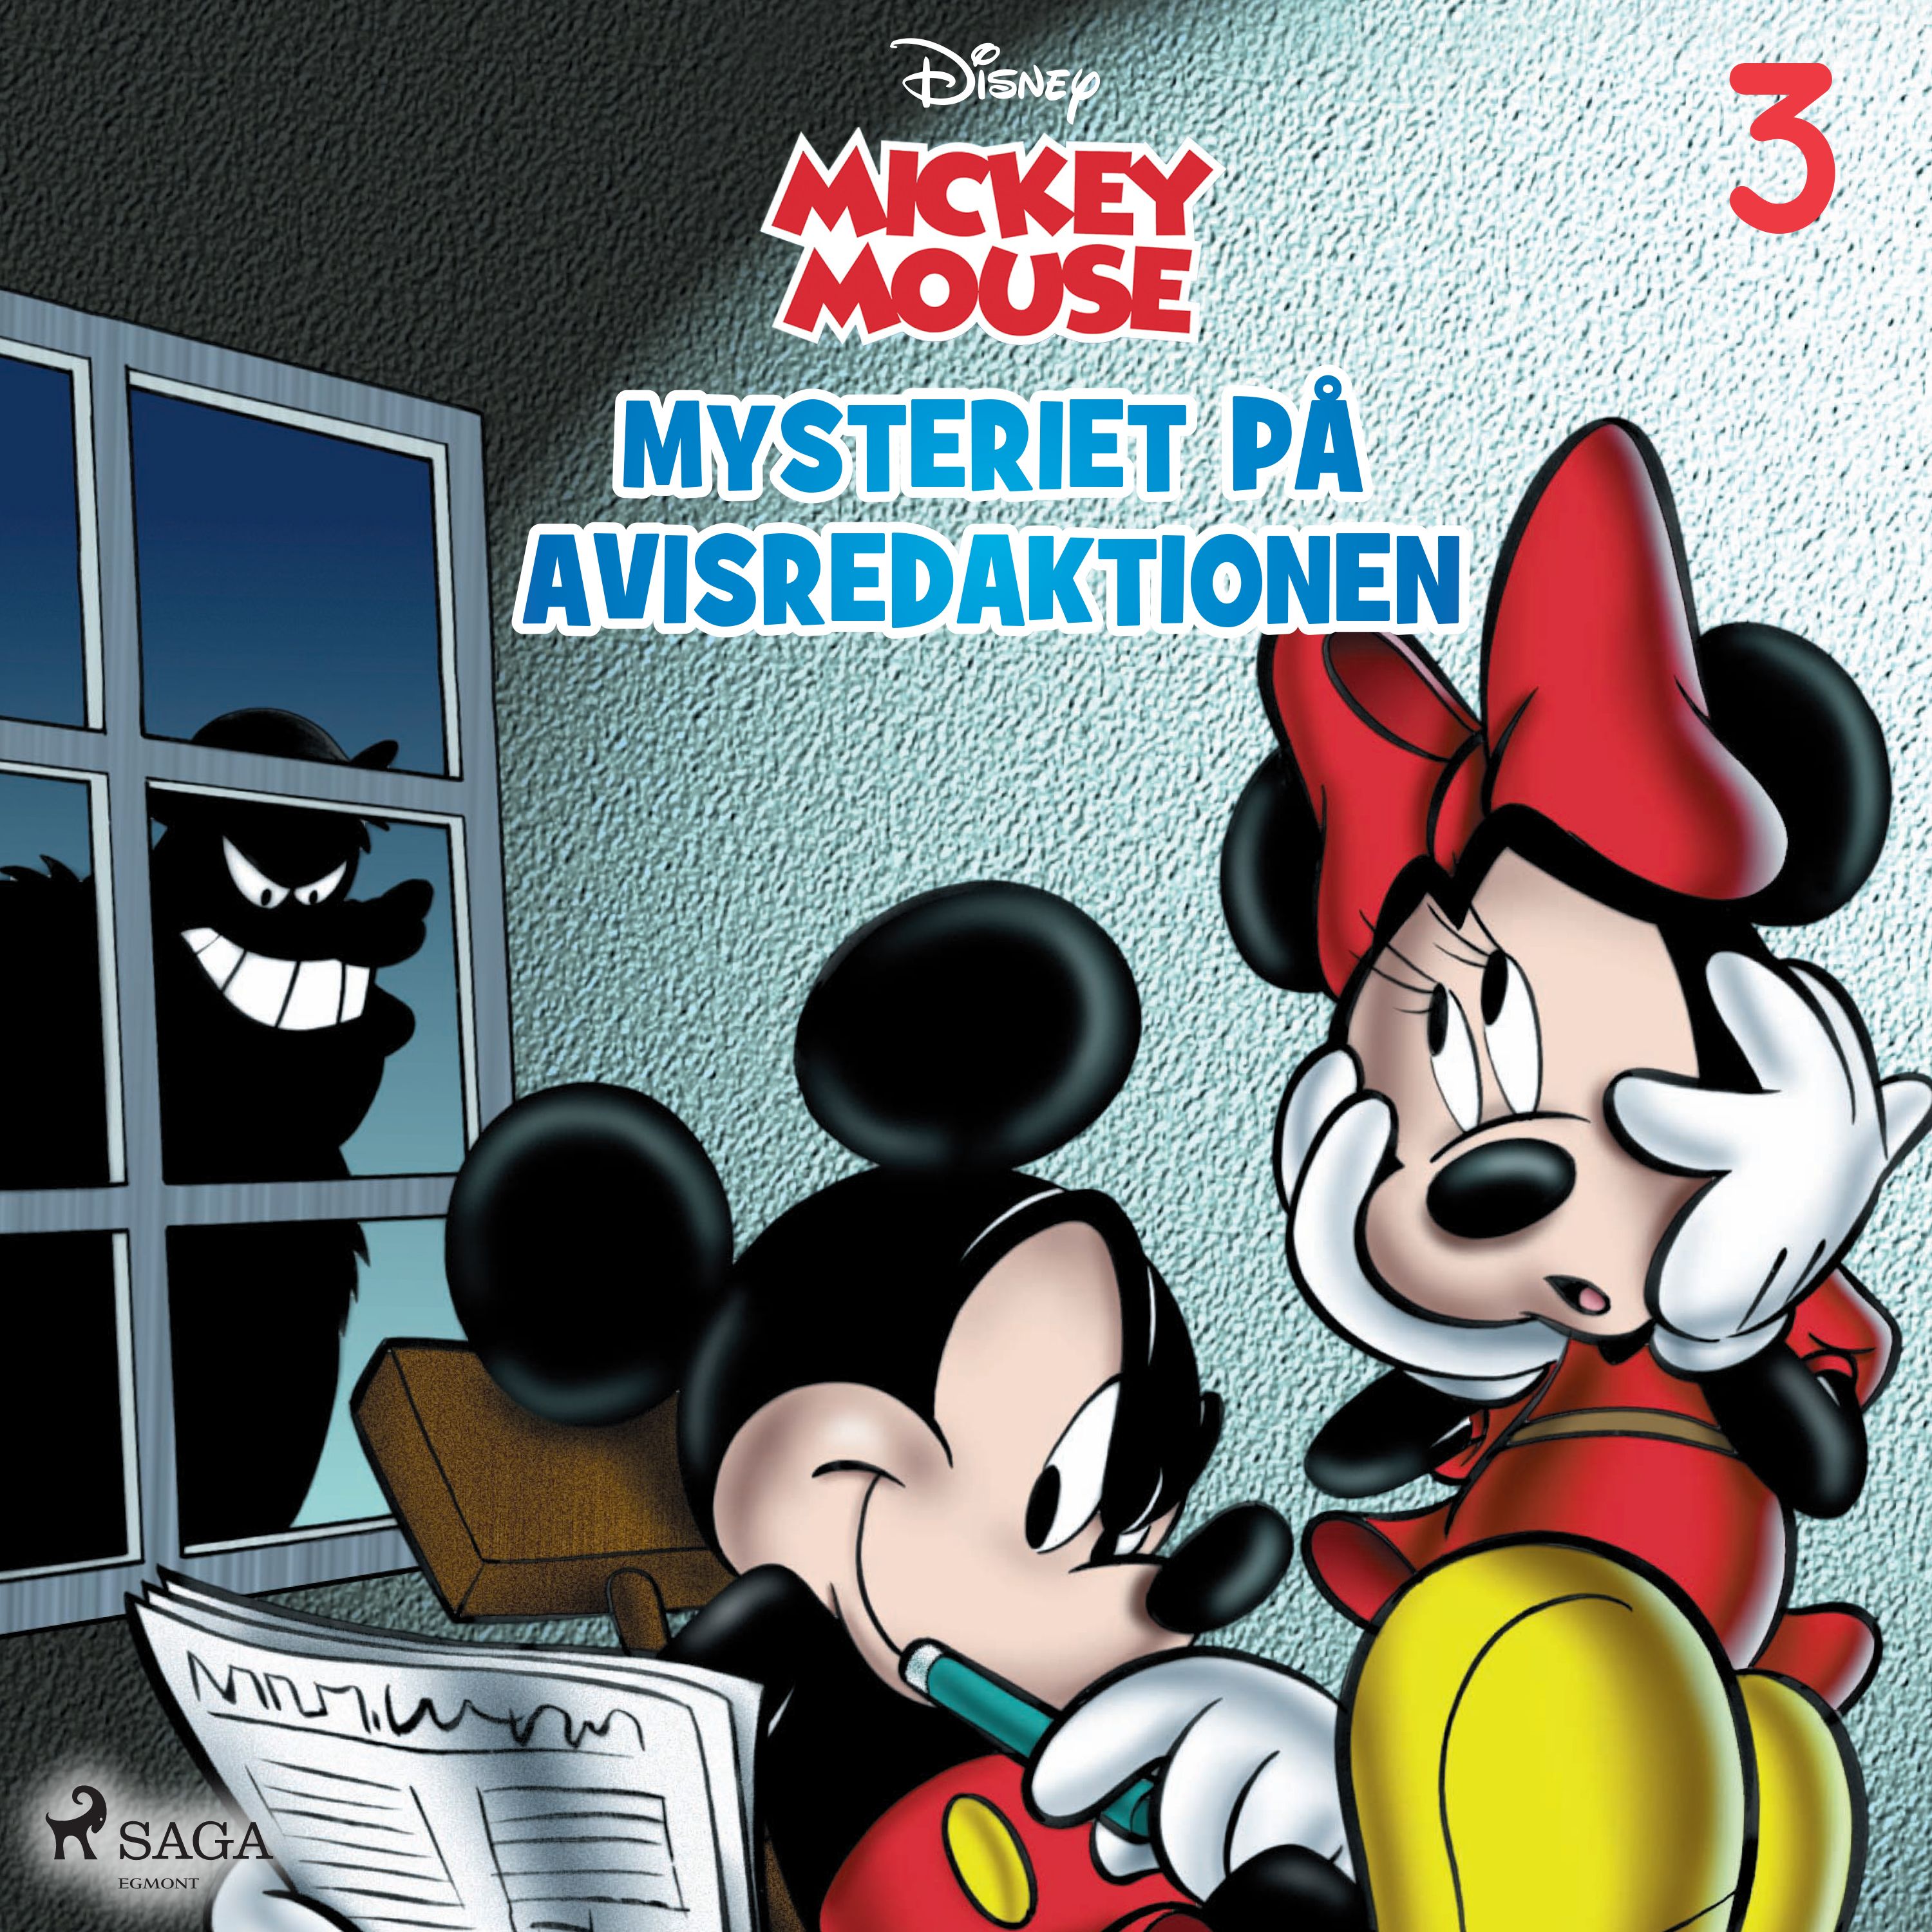 Detektiv Mickey - Mysteriet på avisredaktionen, audiobook by Disney